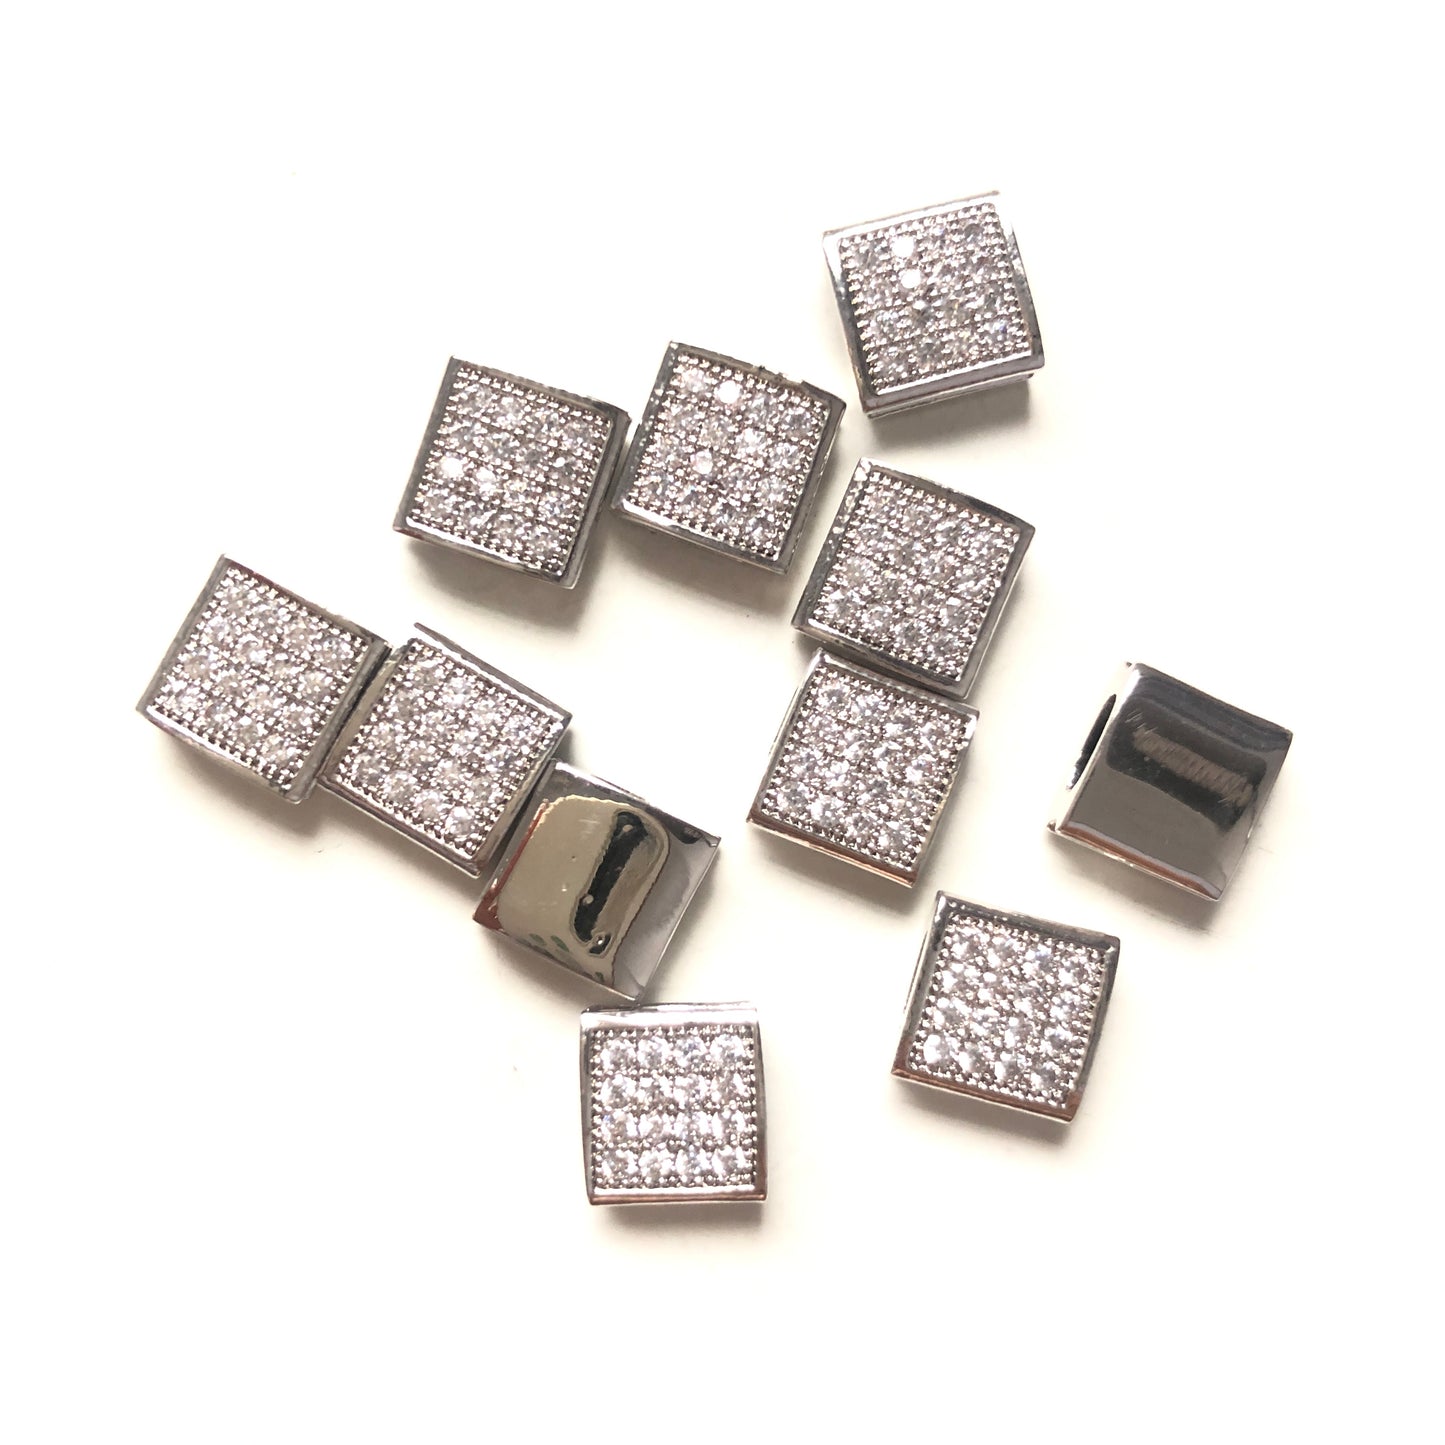 20pcs/lot 8.6*8.6mm CZ Paved Square Rondelle Spacers Silver CZ Paved Spacers Rondelle Beads Charms Beads Beyond